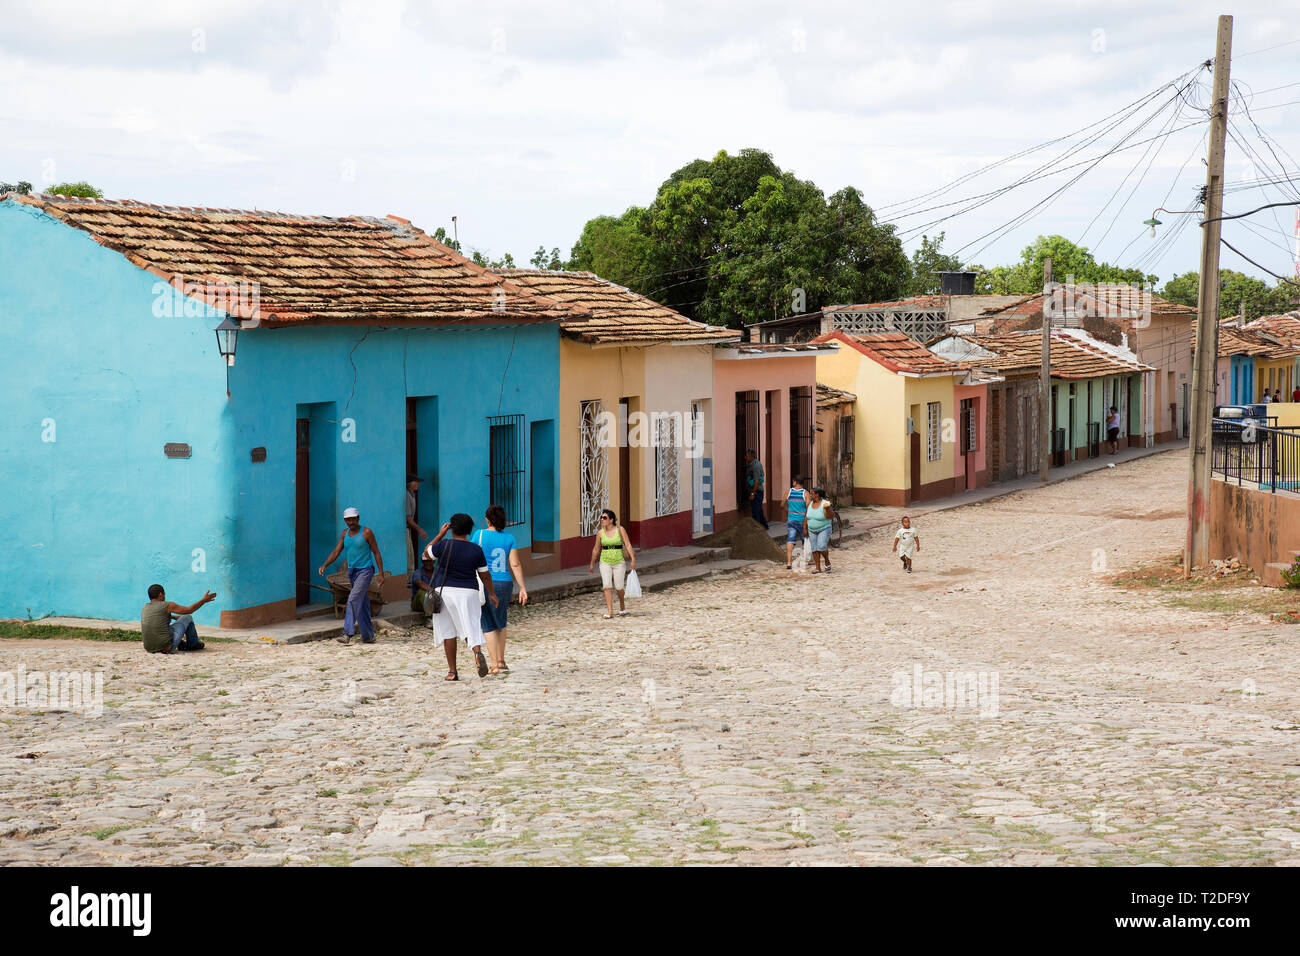 Scena di strada di Trinidad, Cuba Foto Stock